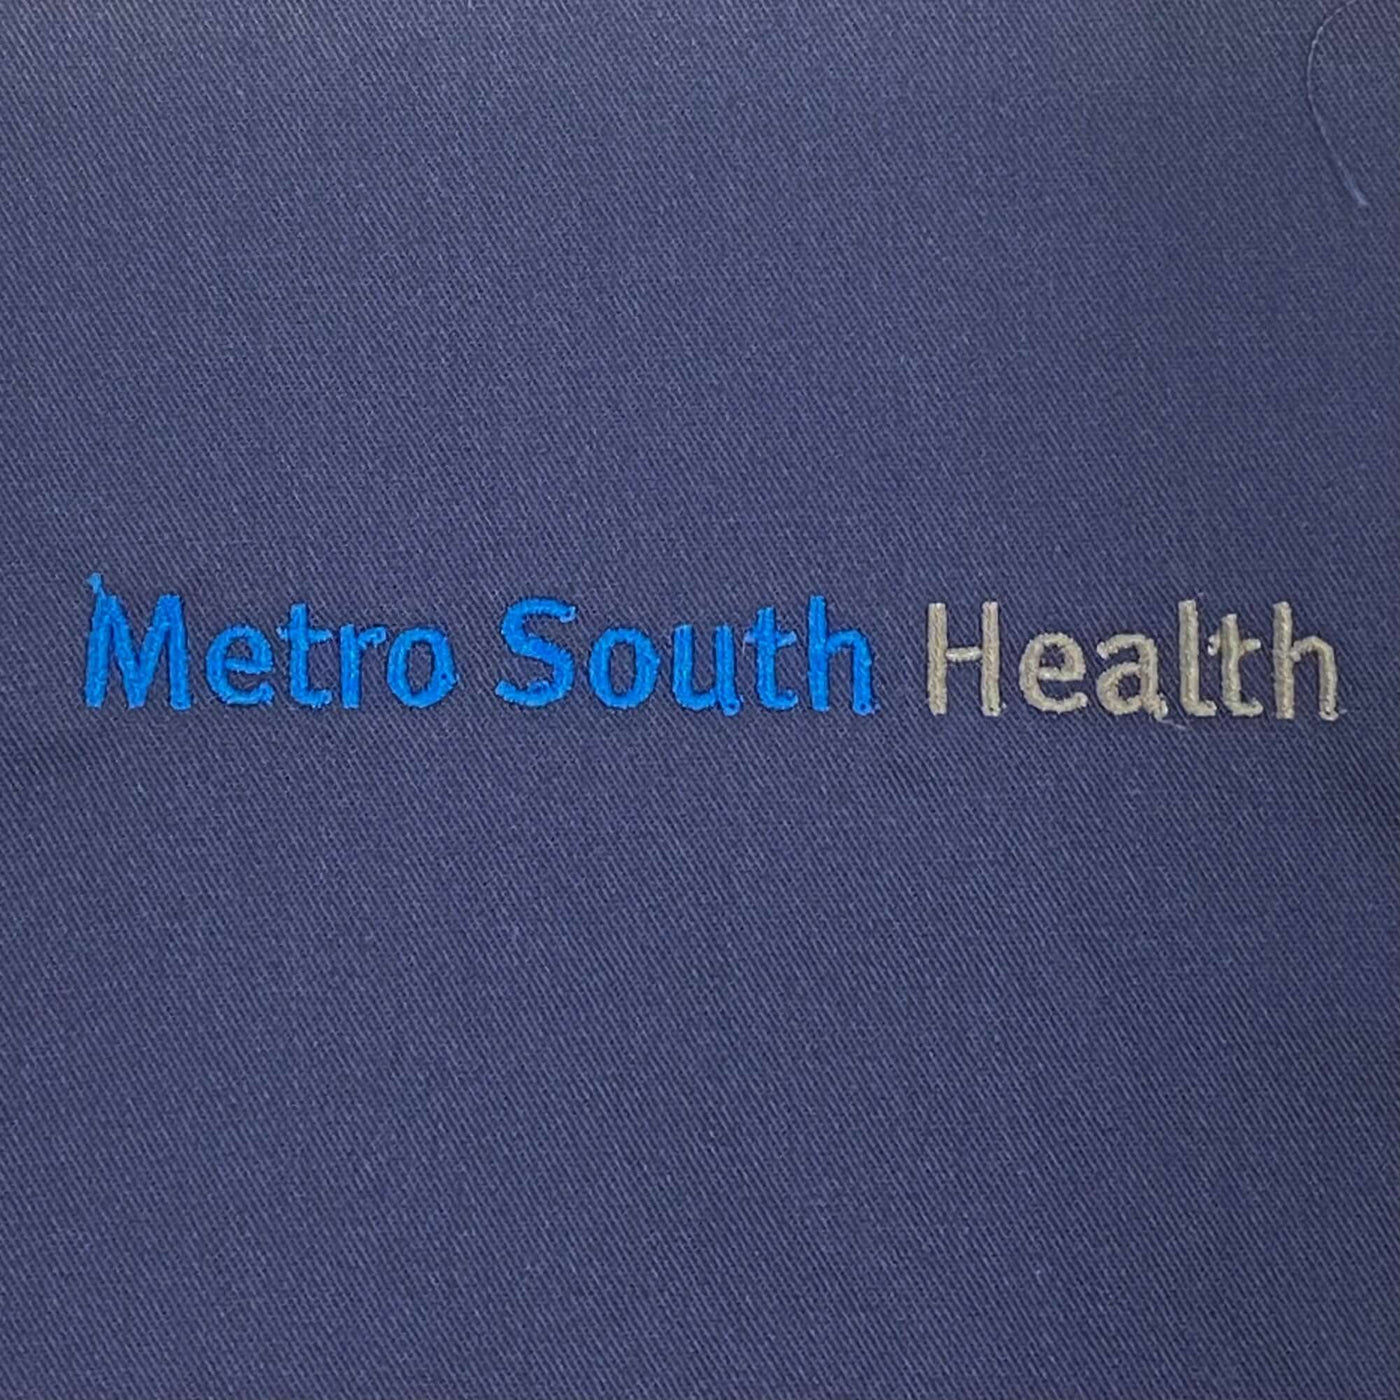 Embroidery Stock Logos - Metro South Health